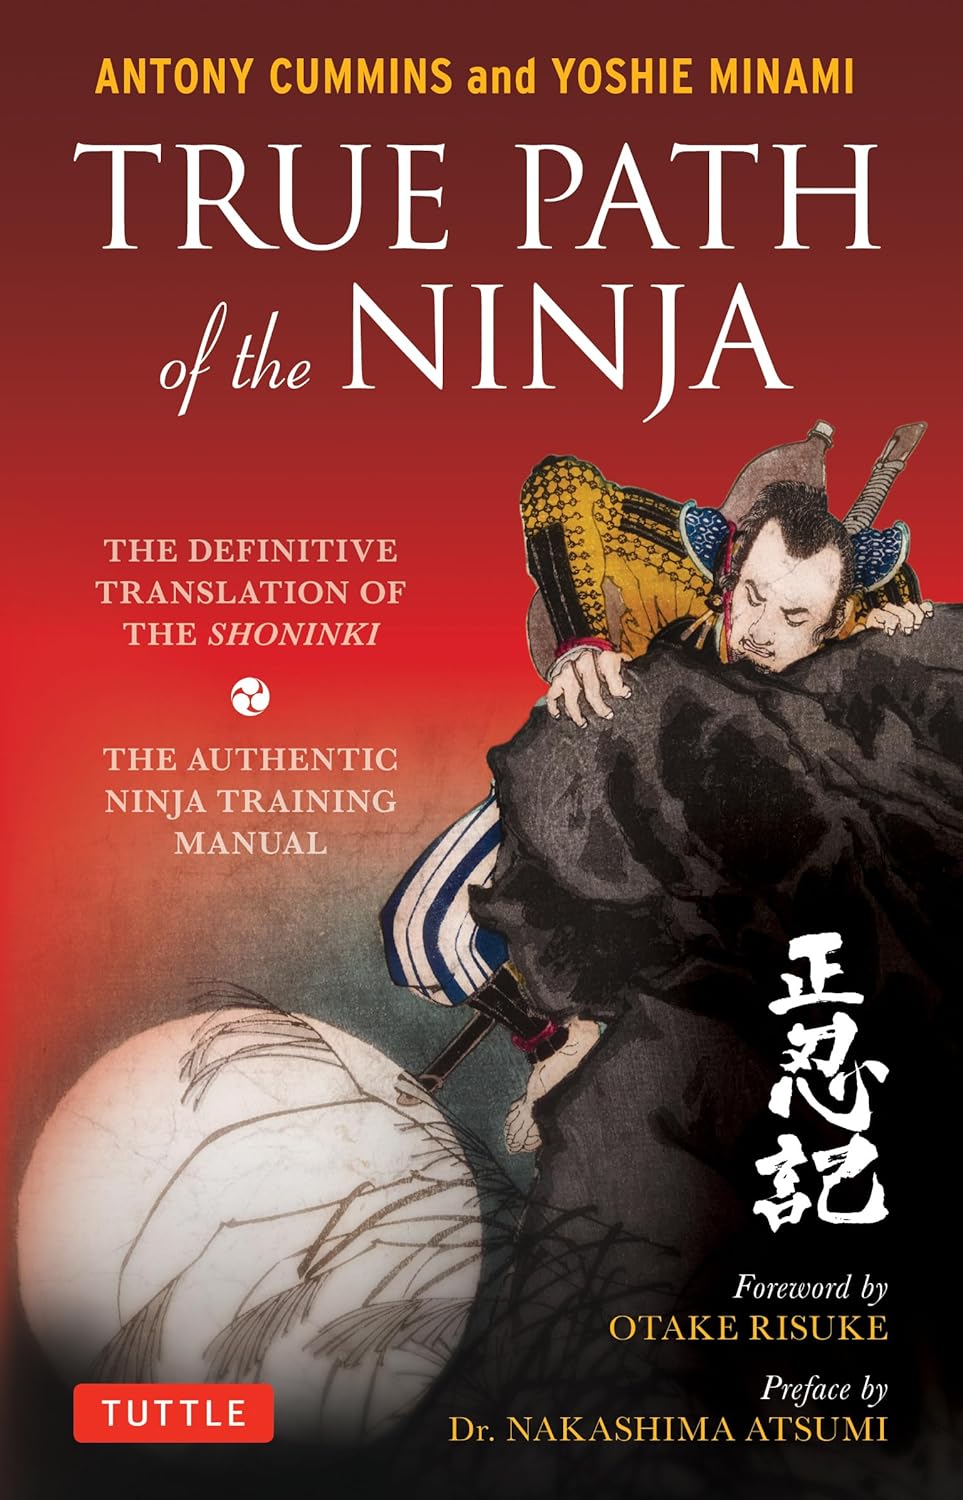 True Path of the Ninja: The Definitive Translation of the Shoninki (The Authentic Ninja Training Manual)  Book by Antony Cummins & Yoshie Minami